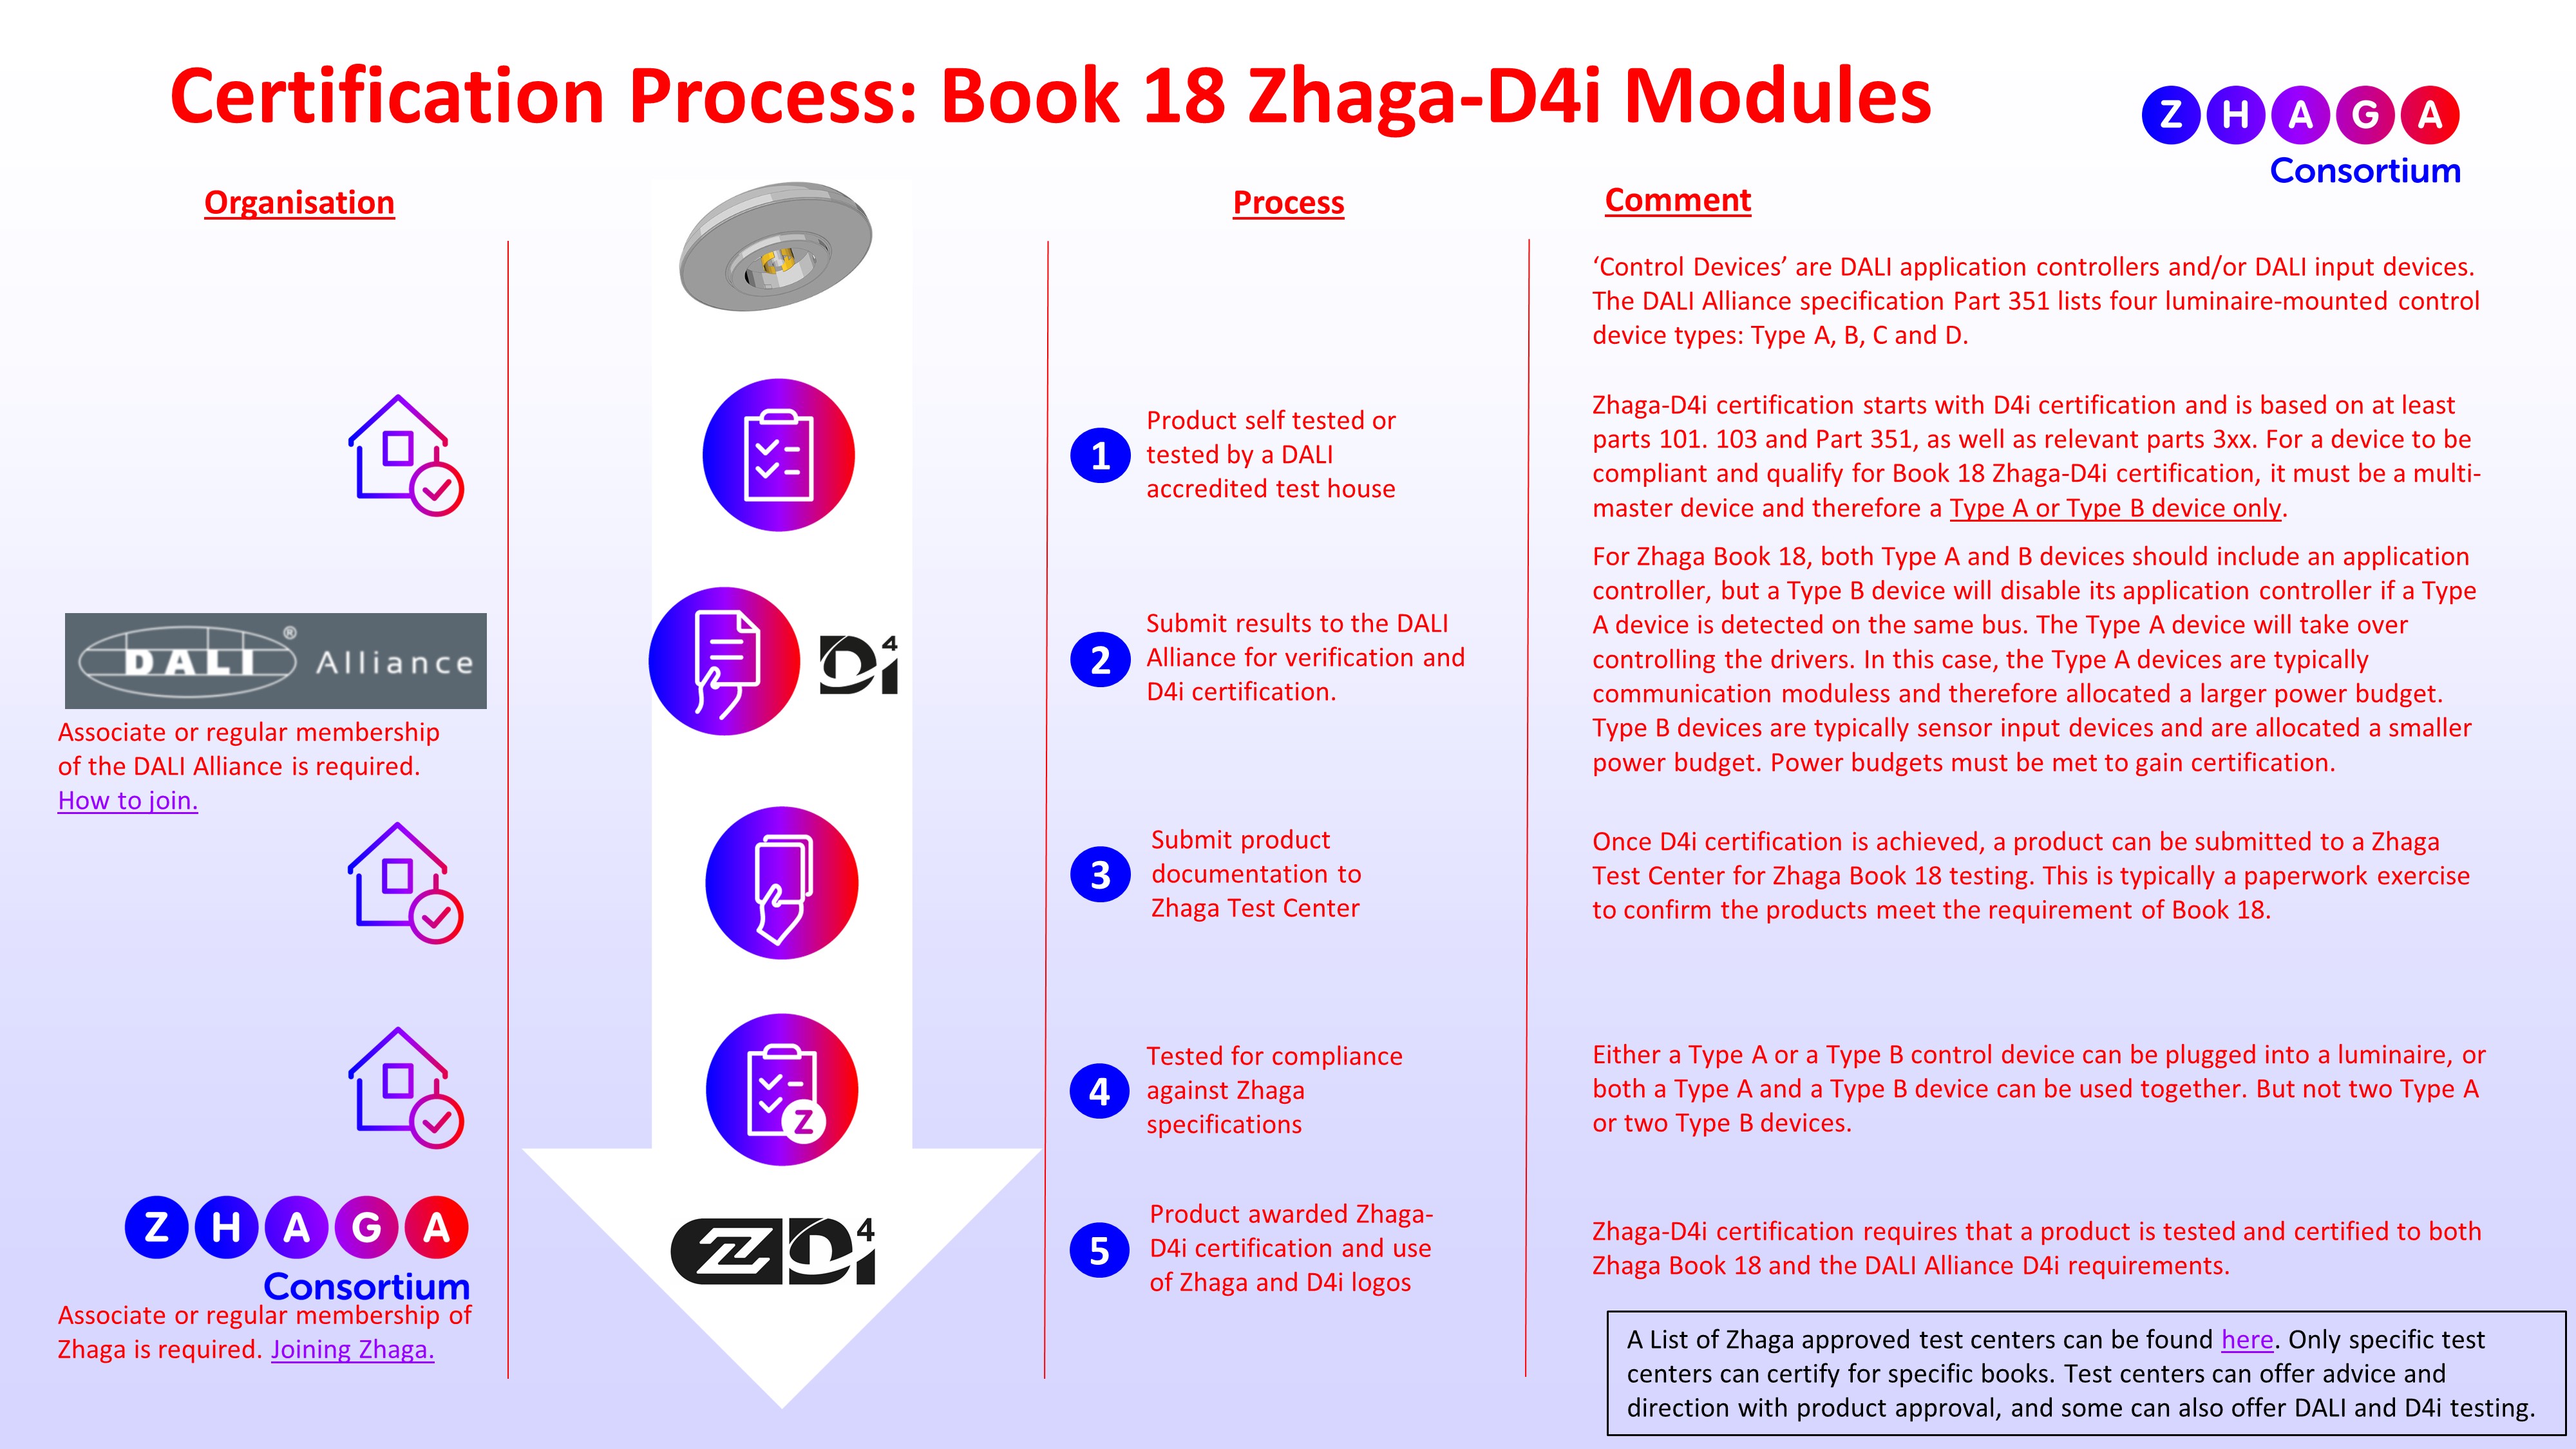 Zhaga D4i Certification Process Modules February 2022